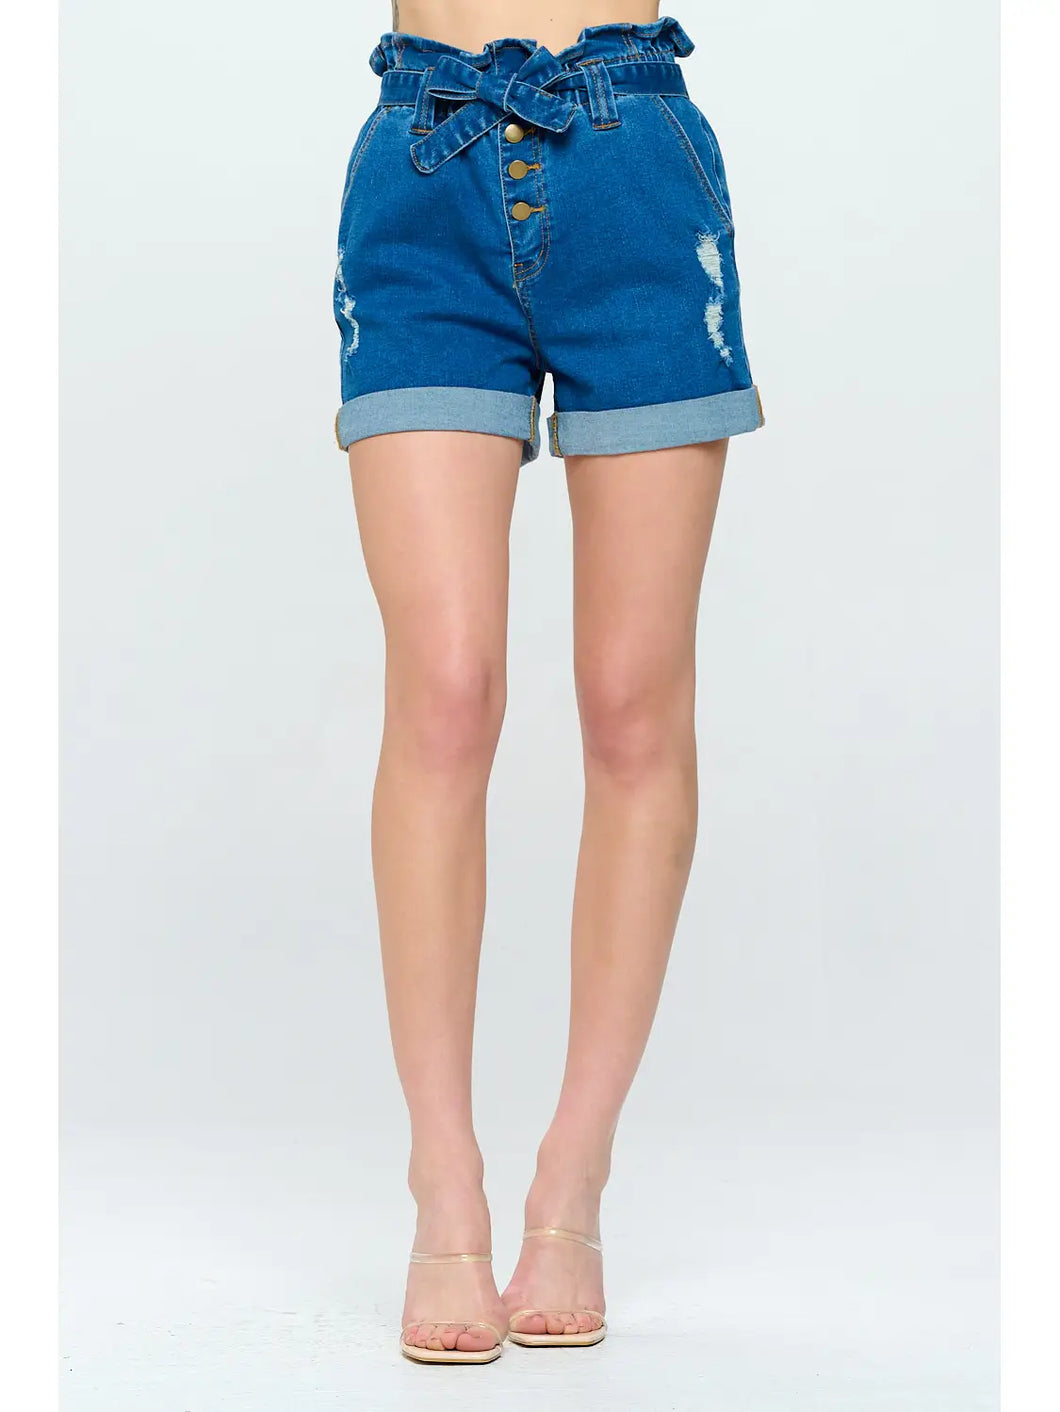 Blue Jean Paperboy Shorts by Blue Turtle - Athena's Fashion Boutique